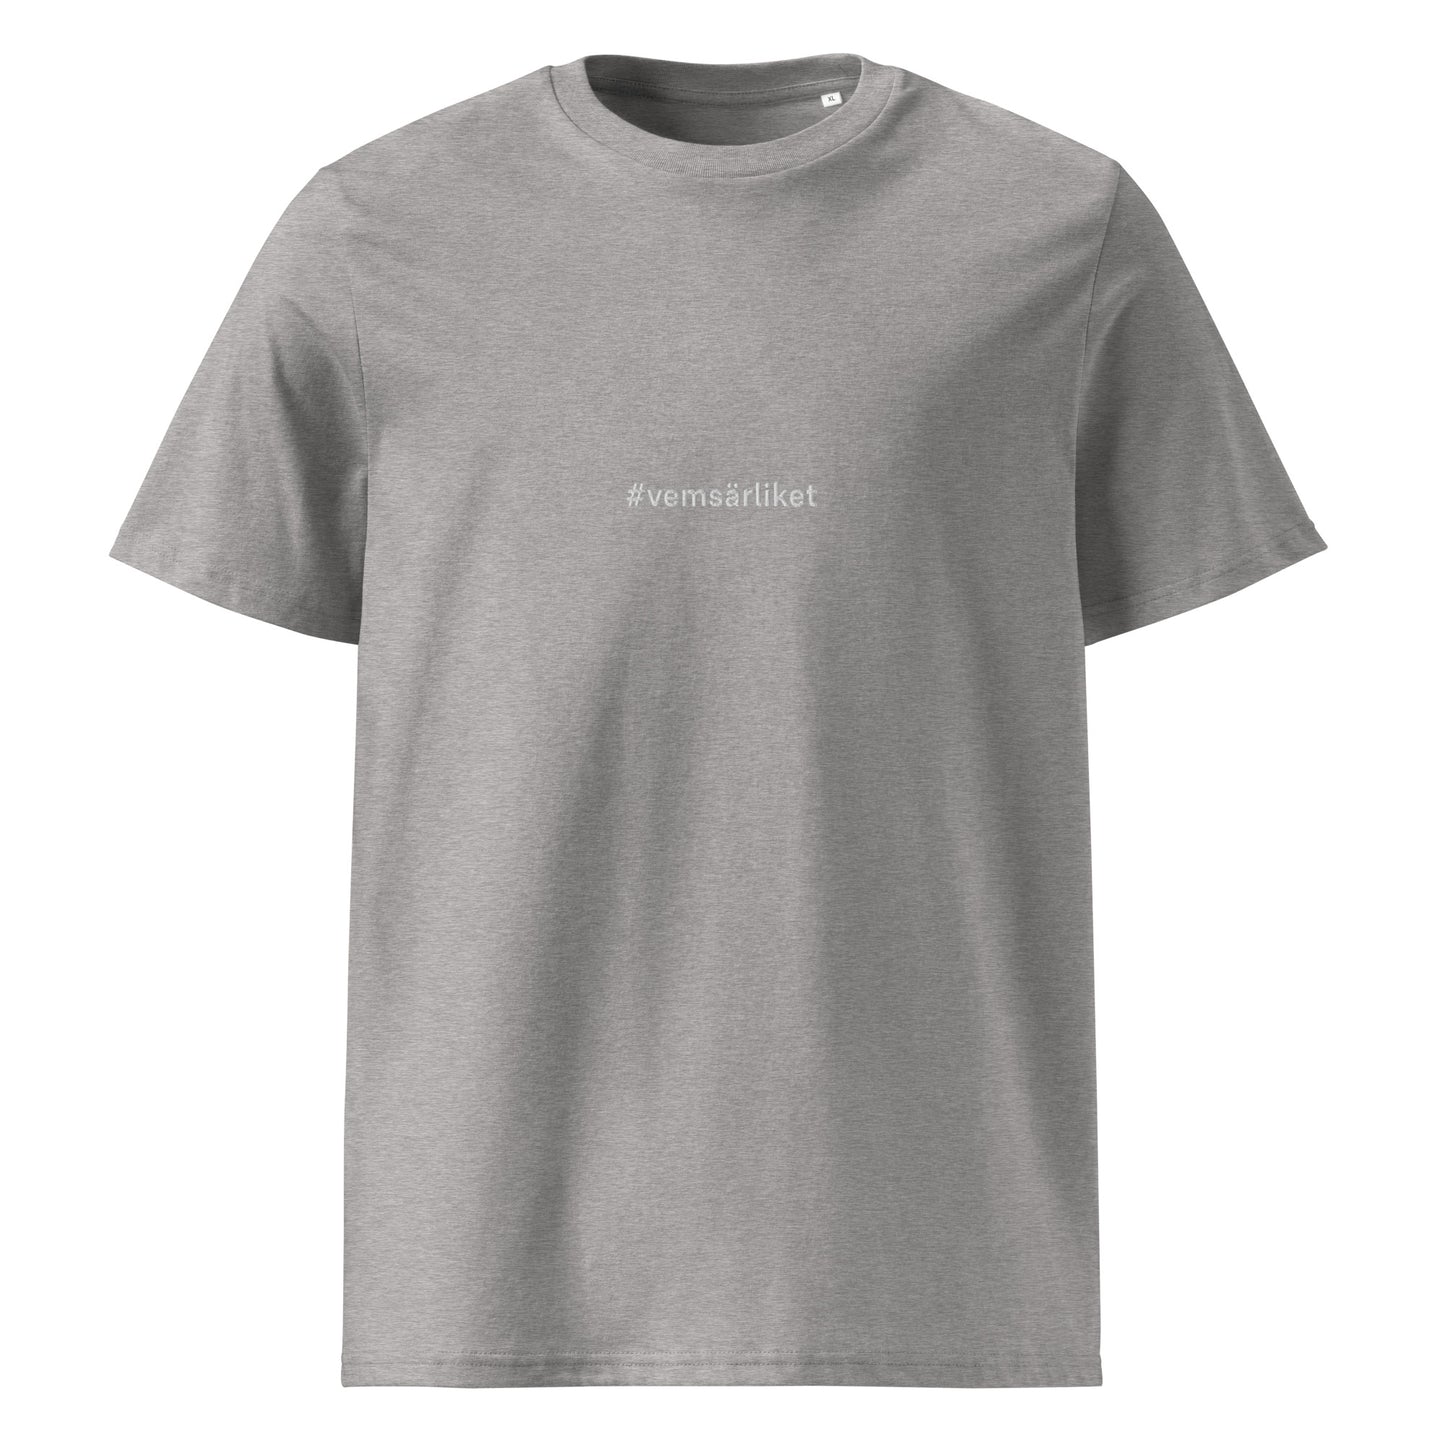 #vemsärliket - Embroidered Unisex organic cotton t-shirt